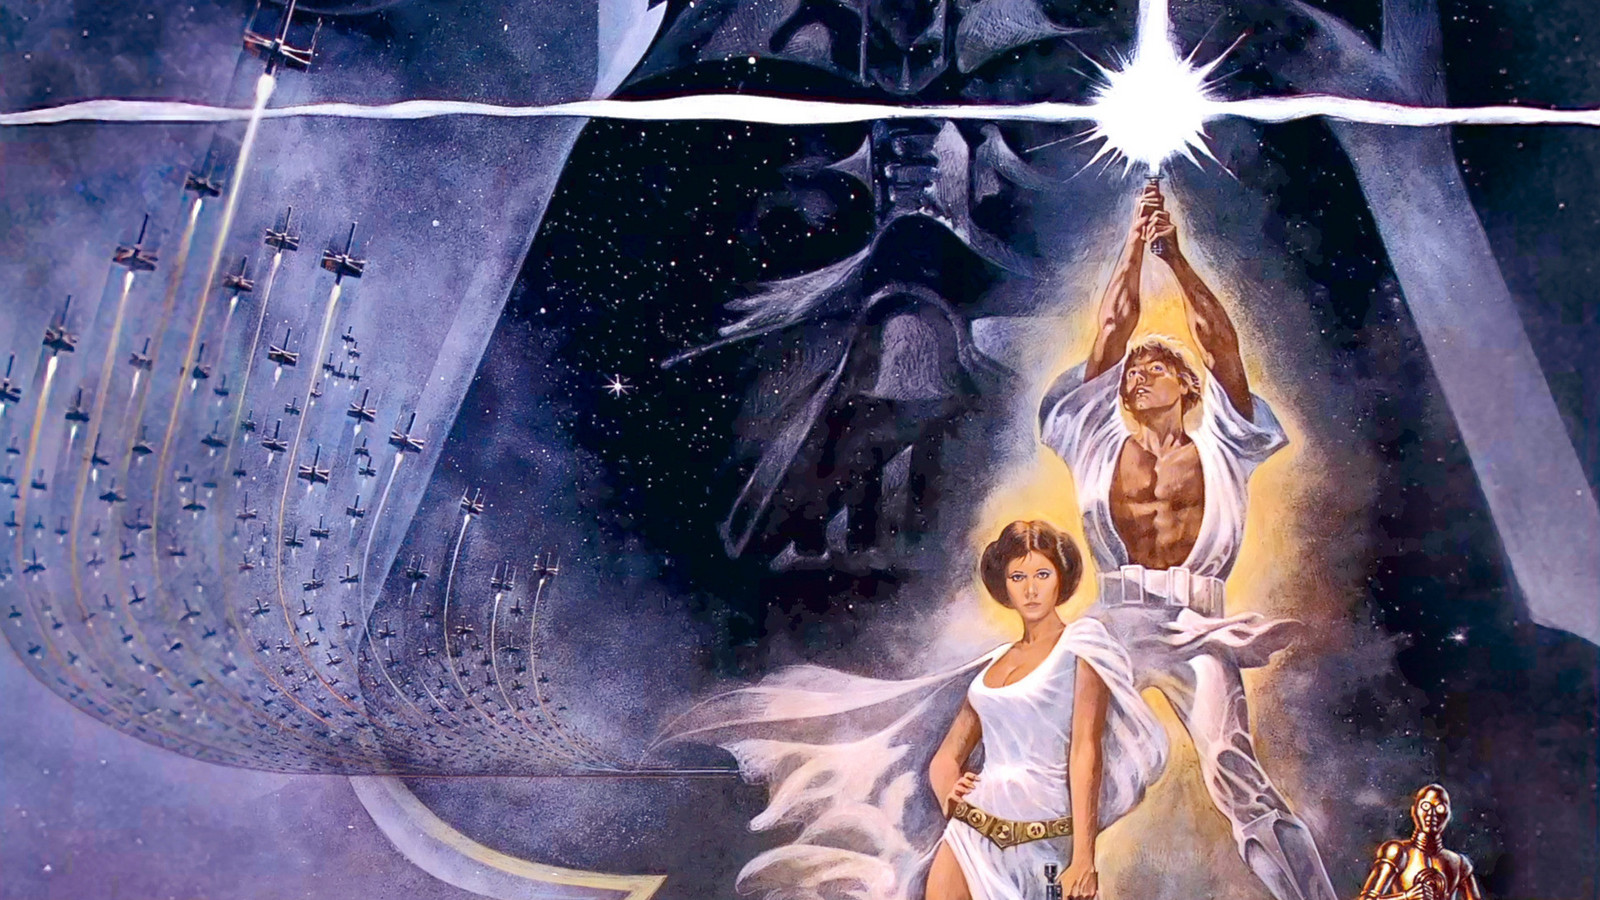 Star Wars Episode IV: A New Hope #20